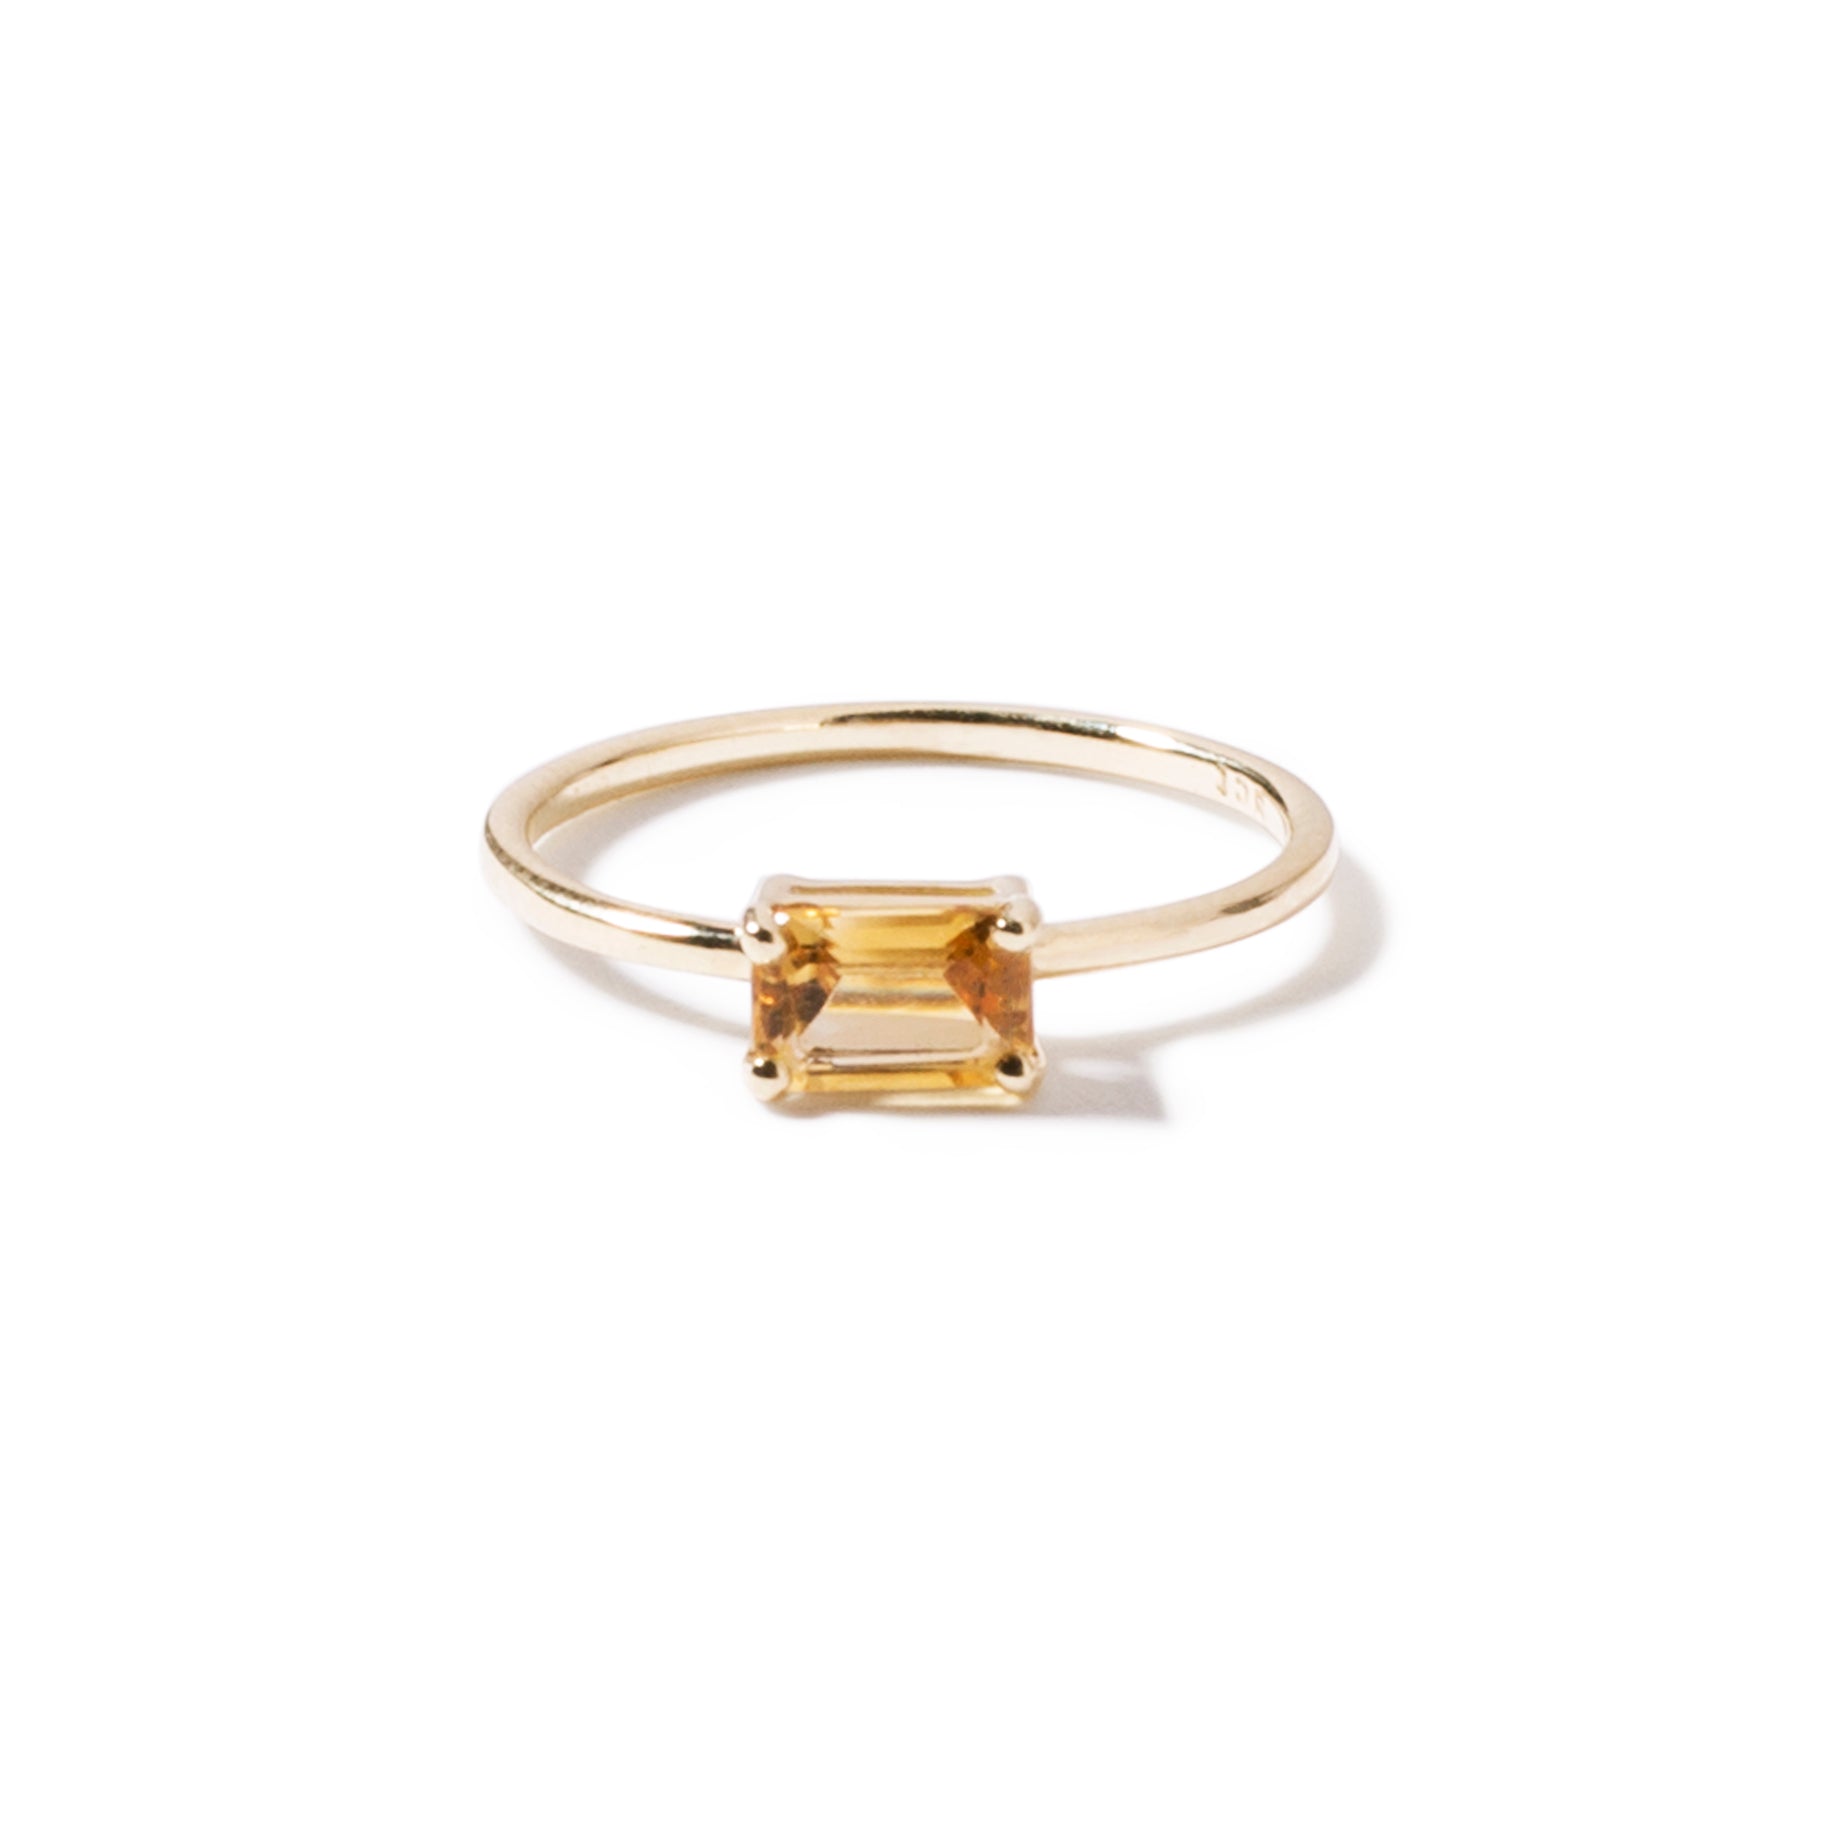 9ct yellow gold luxury emerald cut citrine ring - horizontal